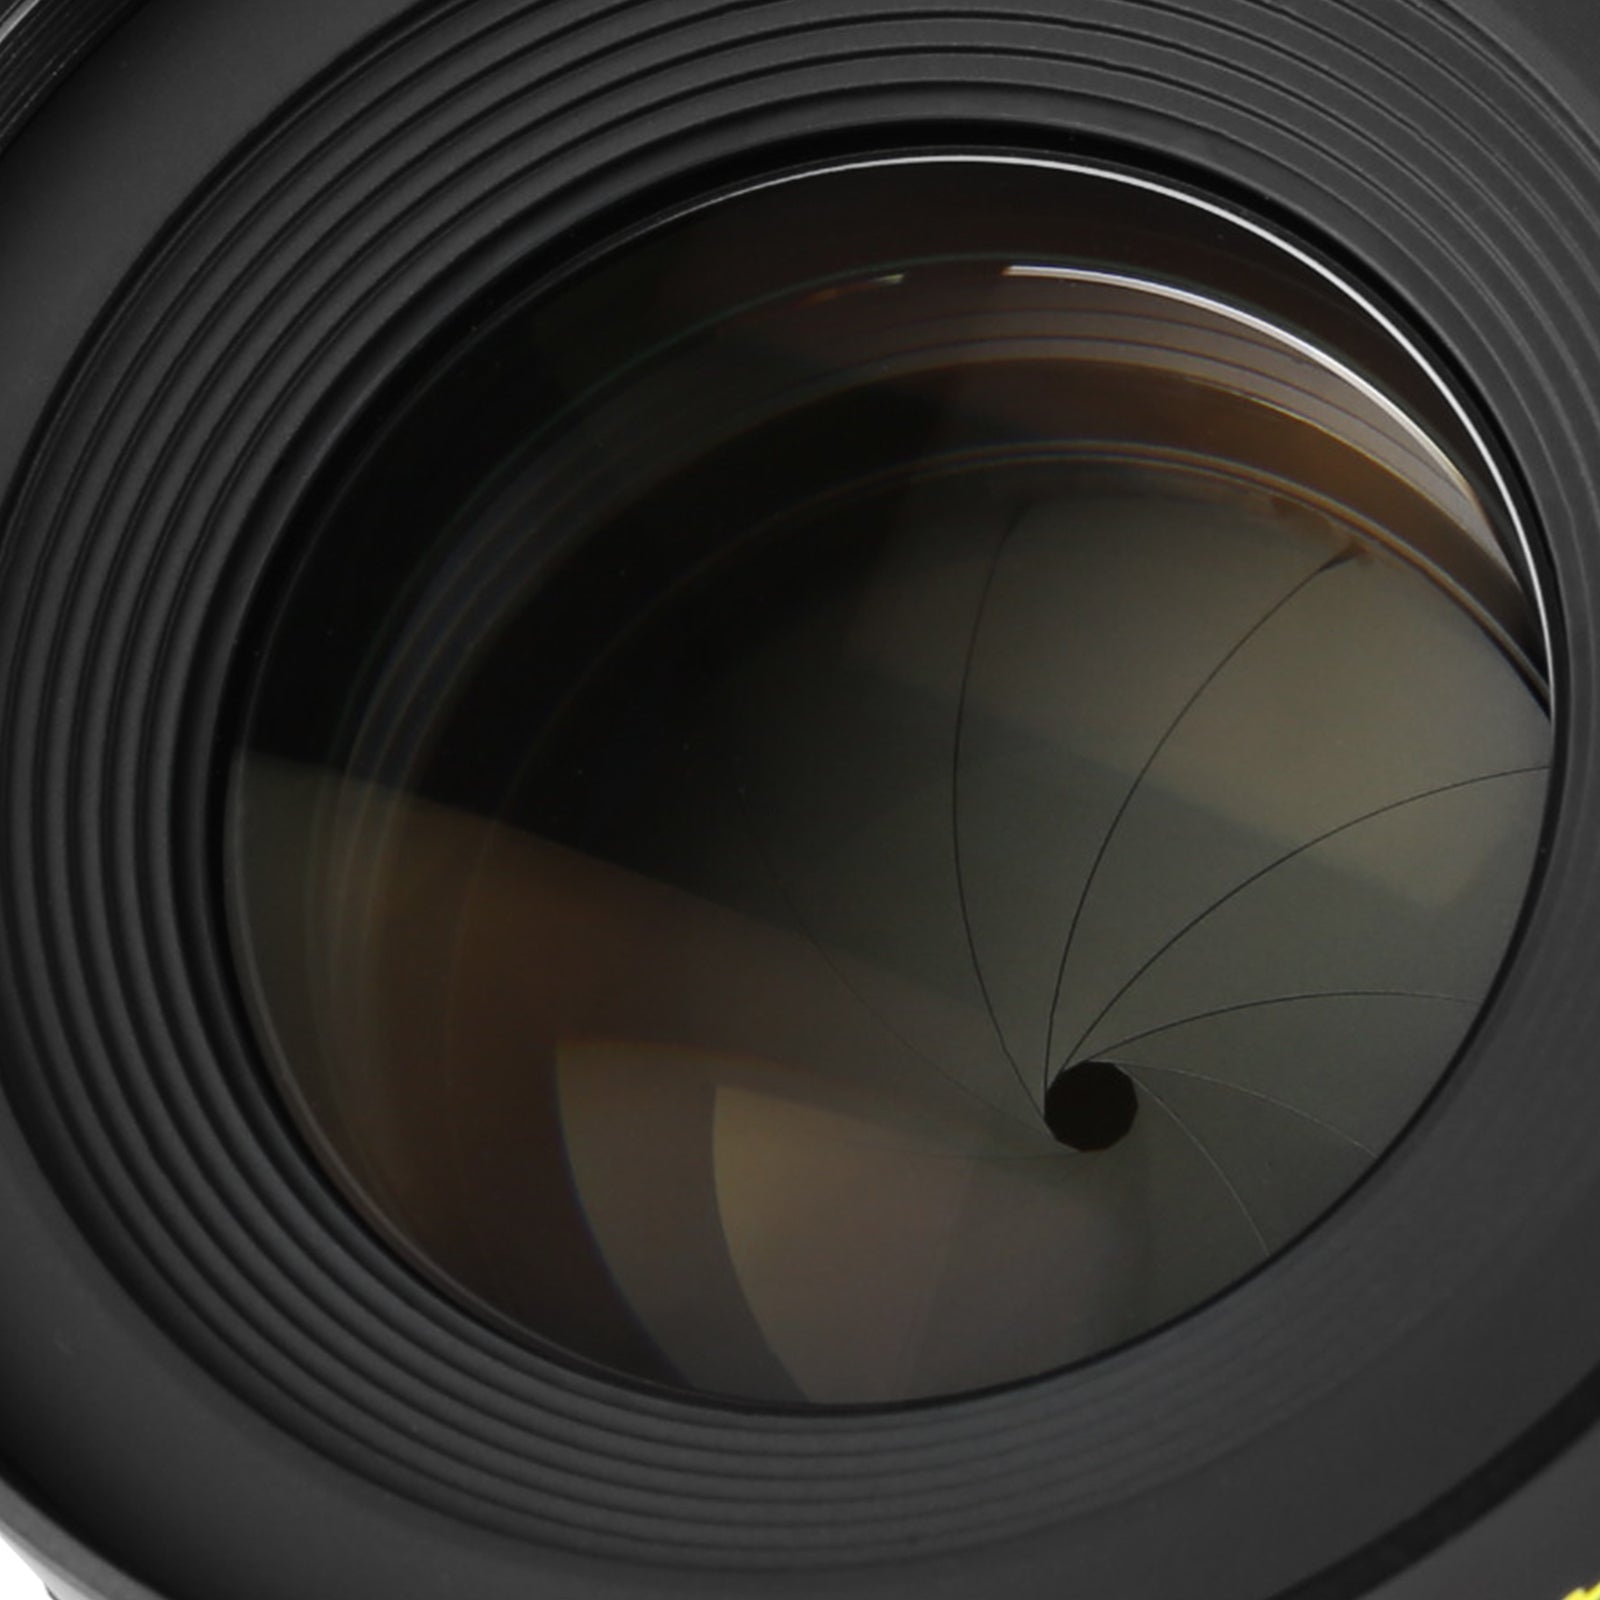 Meike Cinema Full Frame Cinema Prime 85mm T2.1 Lens (L Mount) in a Front Close-Up View